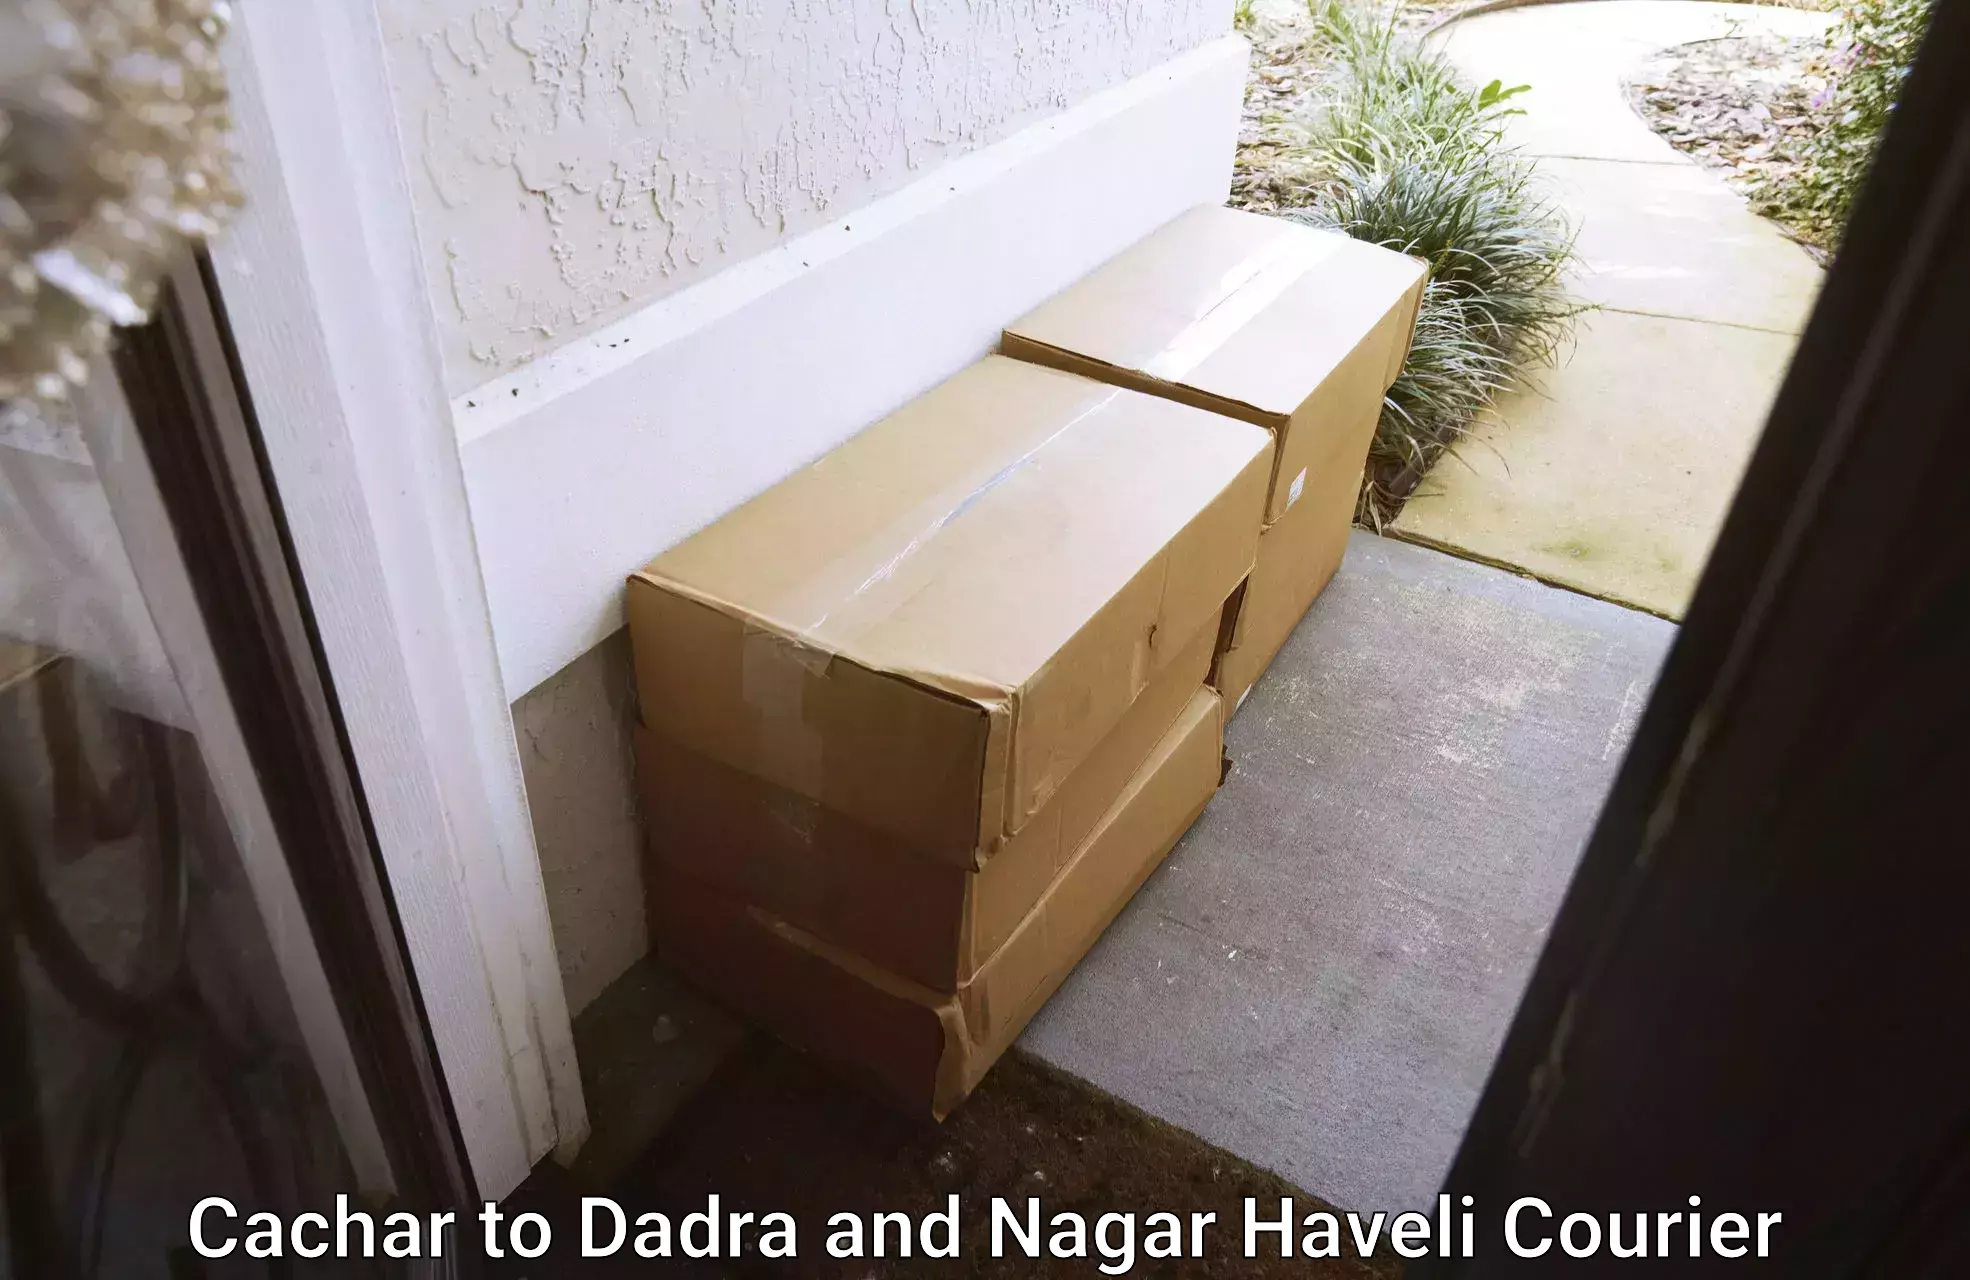 International courier networks Cachar to Dadra and Nagar Haveli